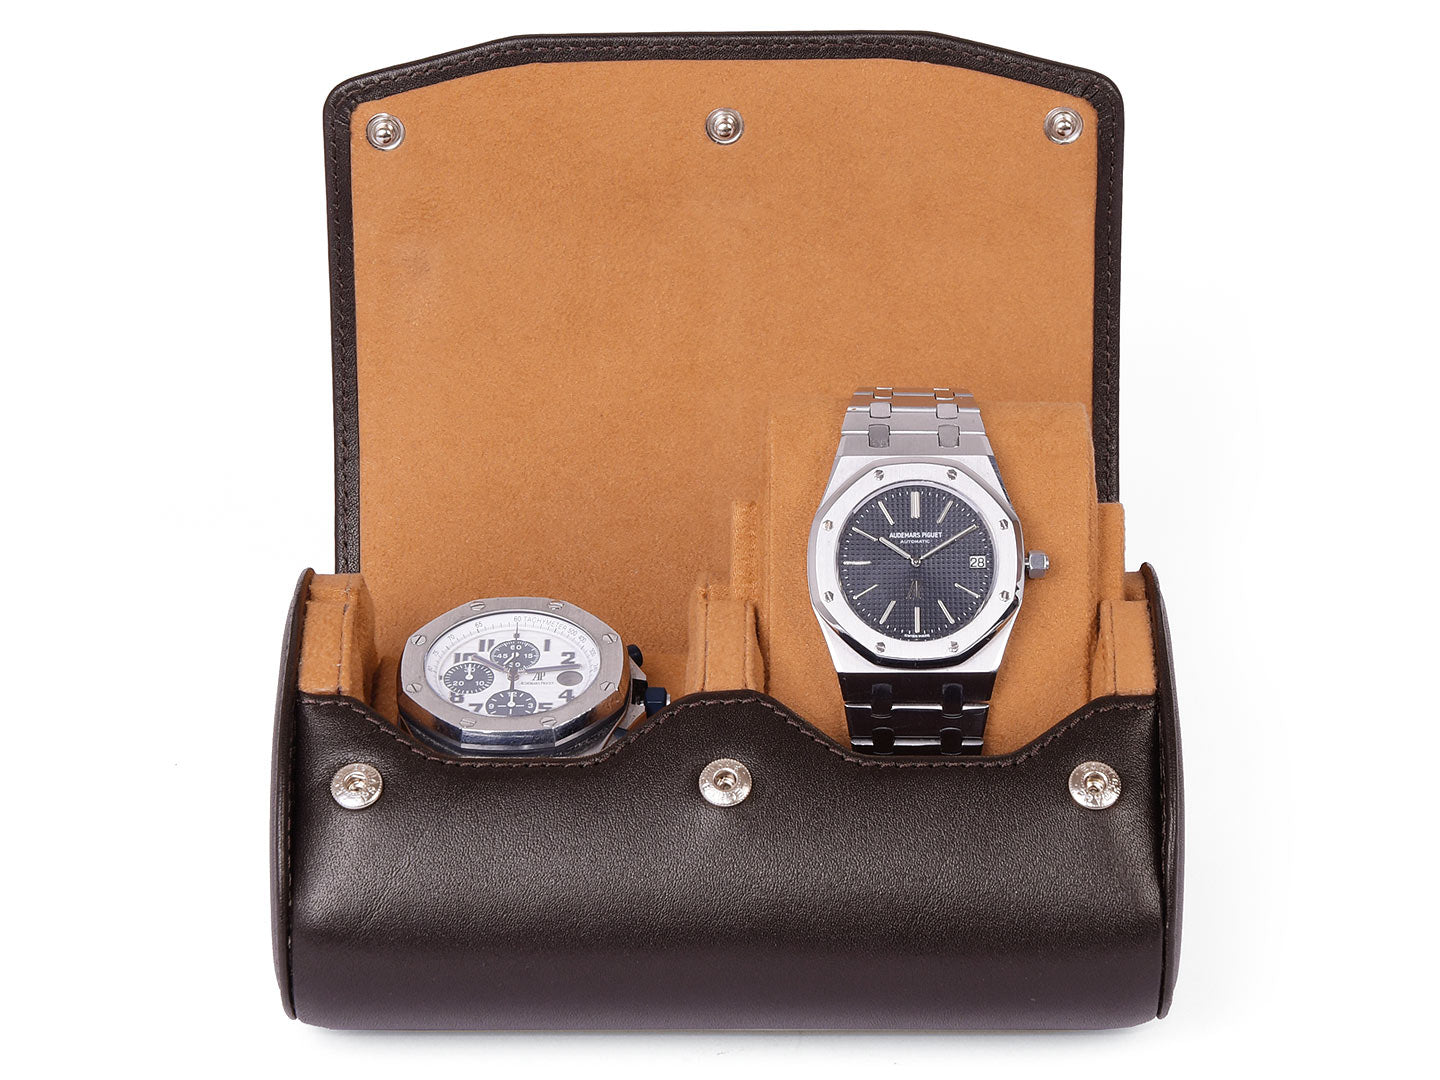 Watch Travel Case for Men - 2 Watch Roll Case Organizer Display - Watch  Case - Watch Organizer - Espresso Brown